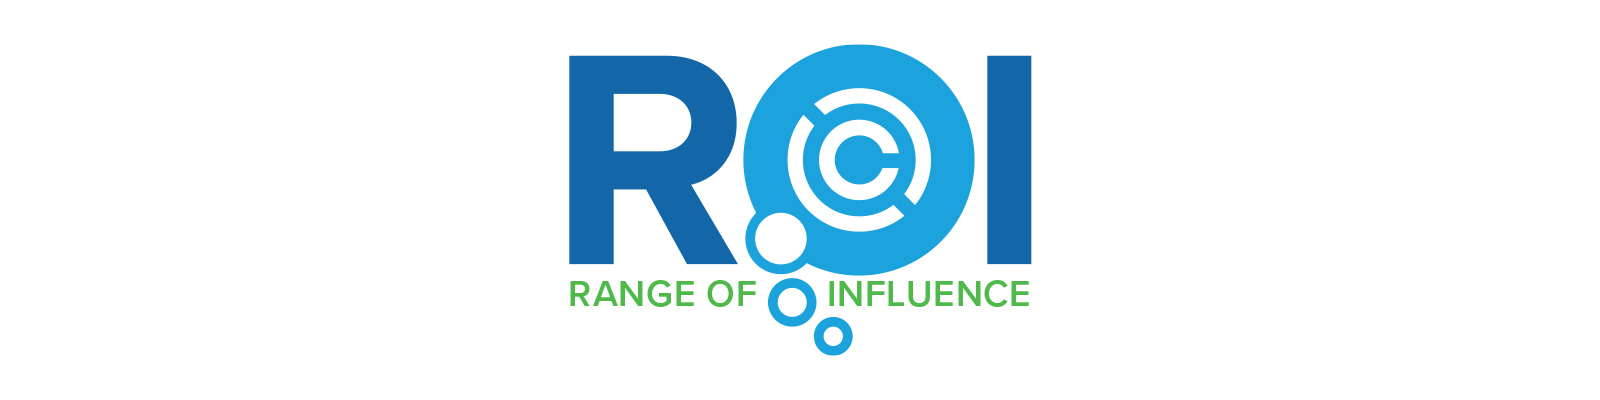 ROI: Range of Influence